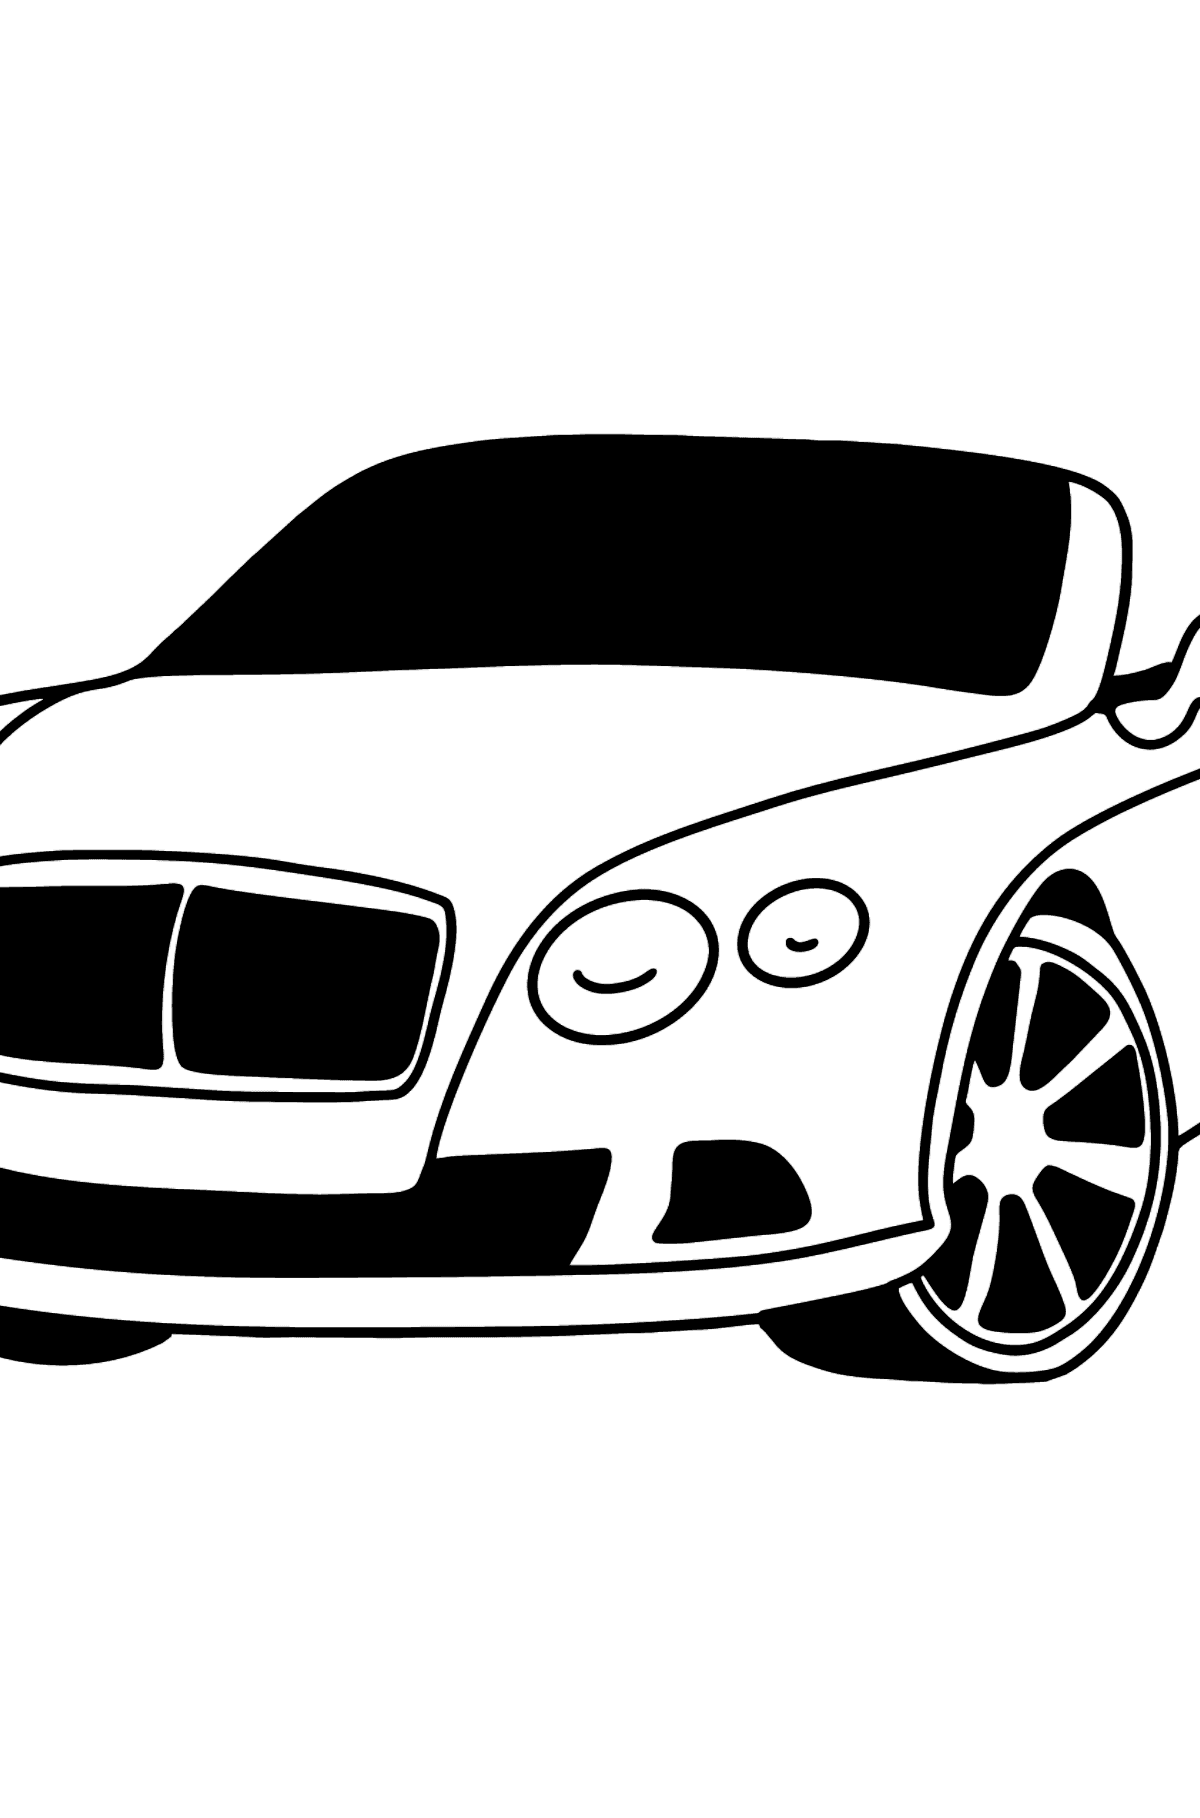 Tegning til fargelegging Bentley Continental GT bil - Tegninger til fargelegging for barn